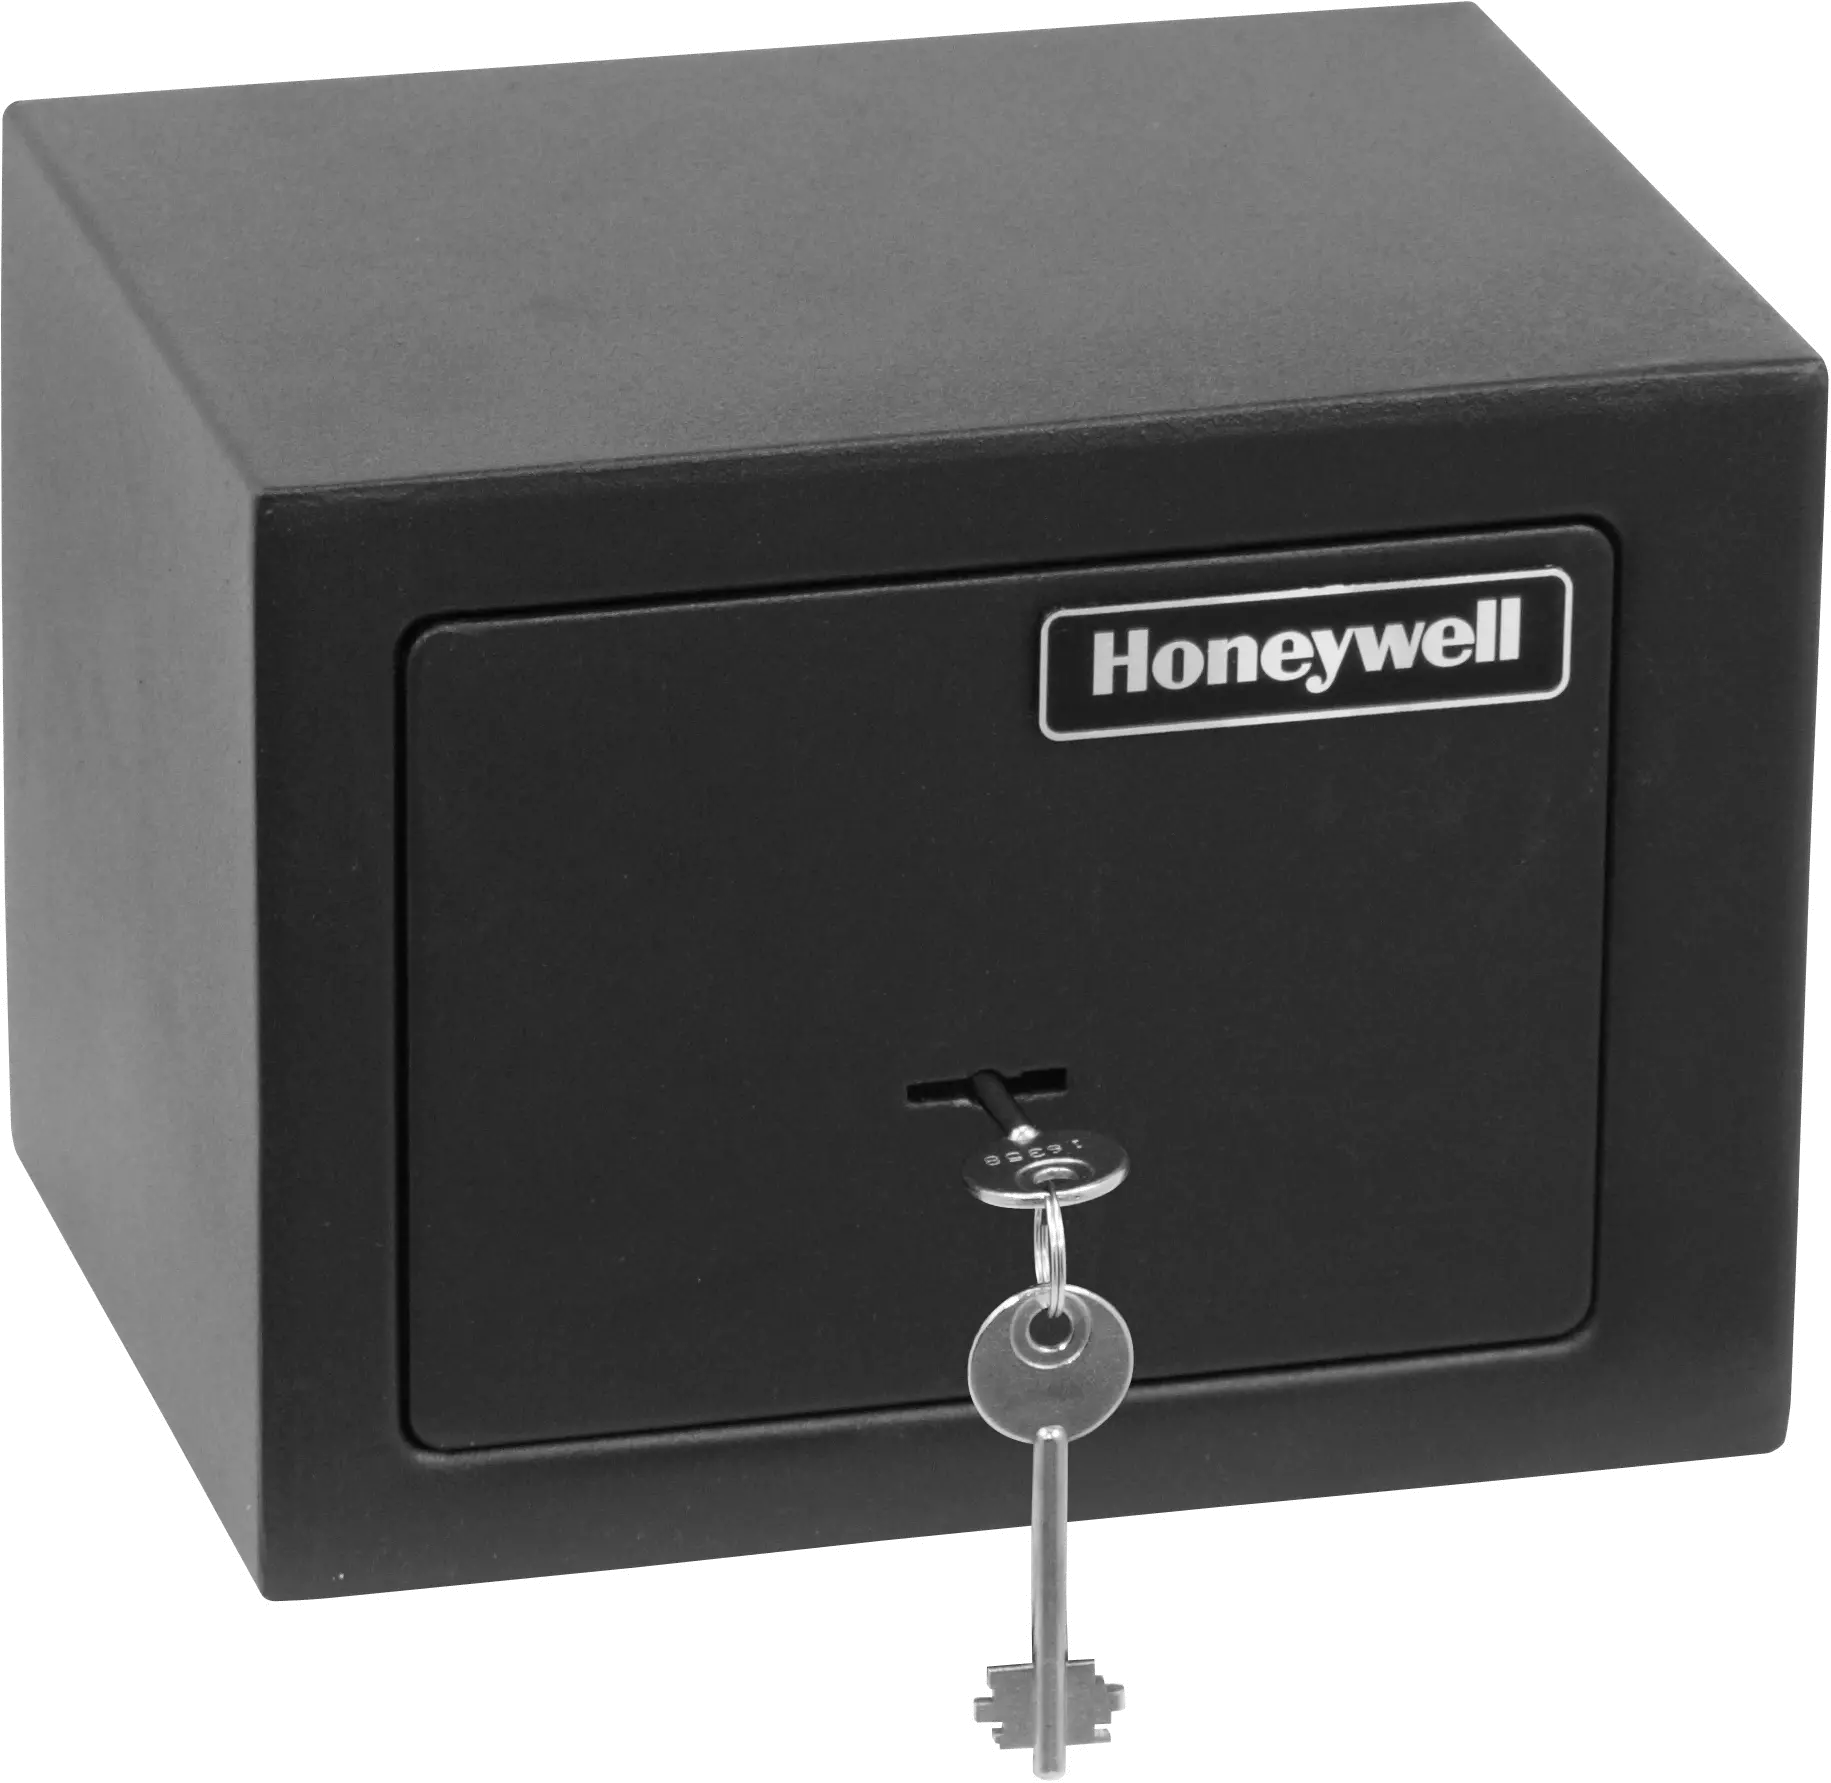 Honeywell 5002 Small Key Lock Security Safe